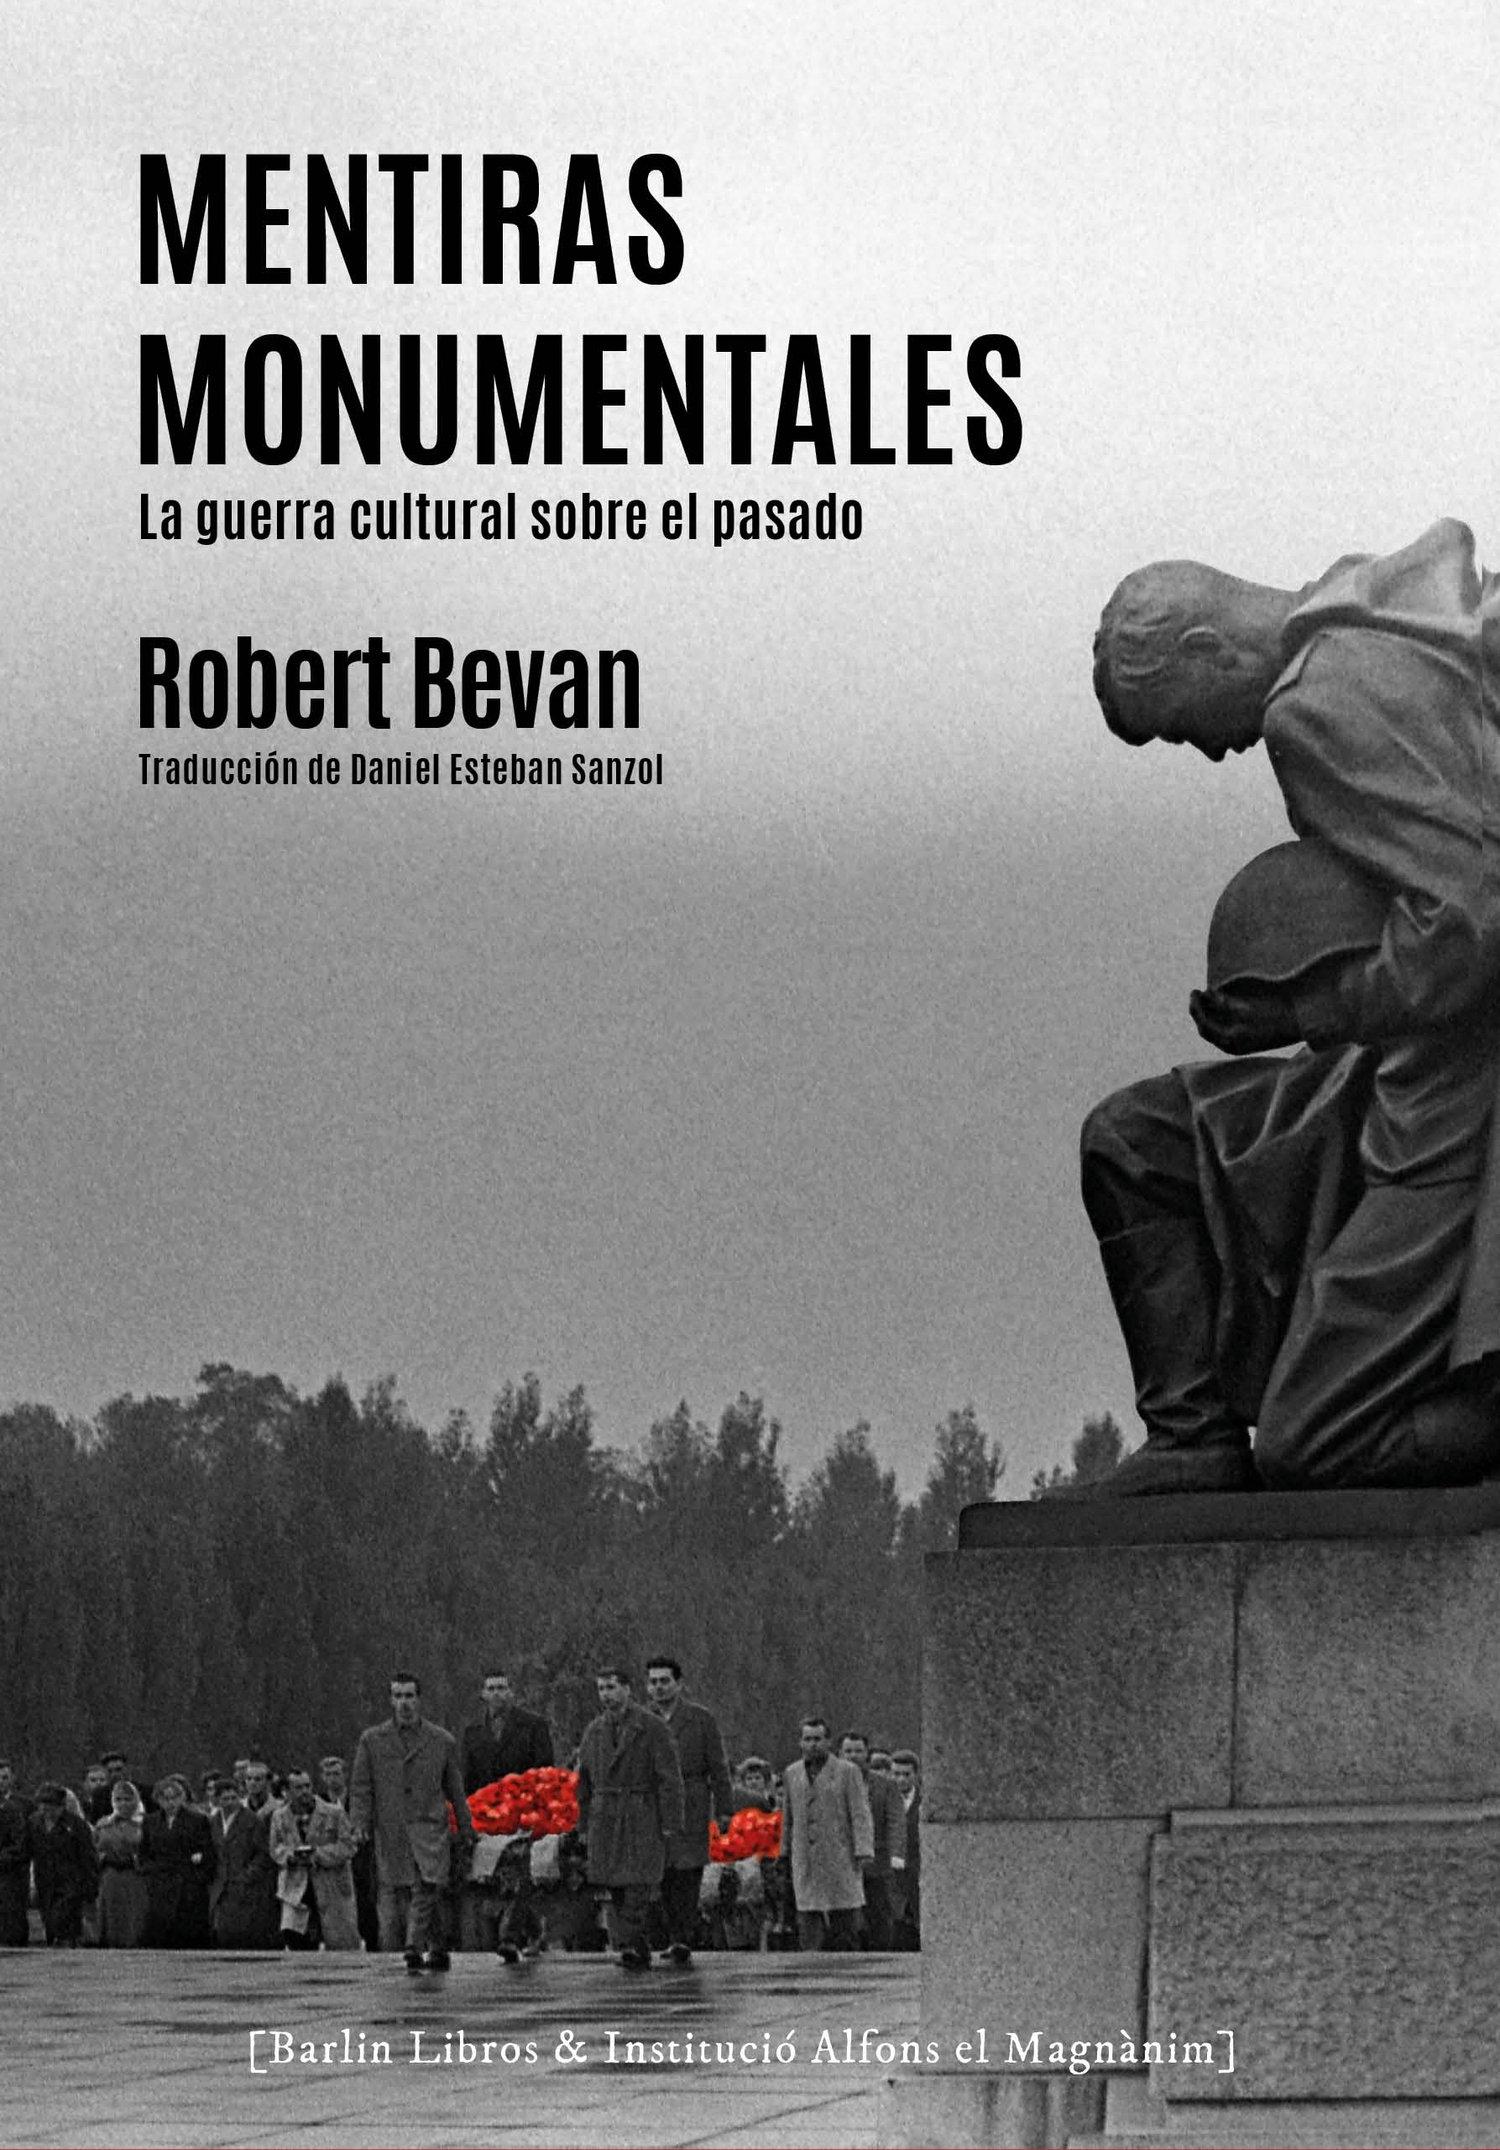 Mentiras Monumentales "La Guerra Cultural sobre el Pasado"